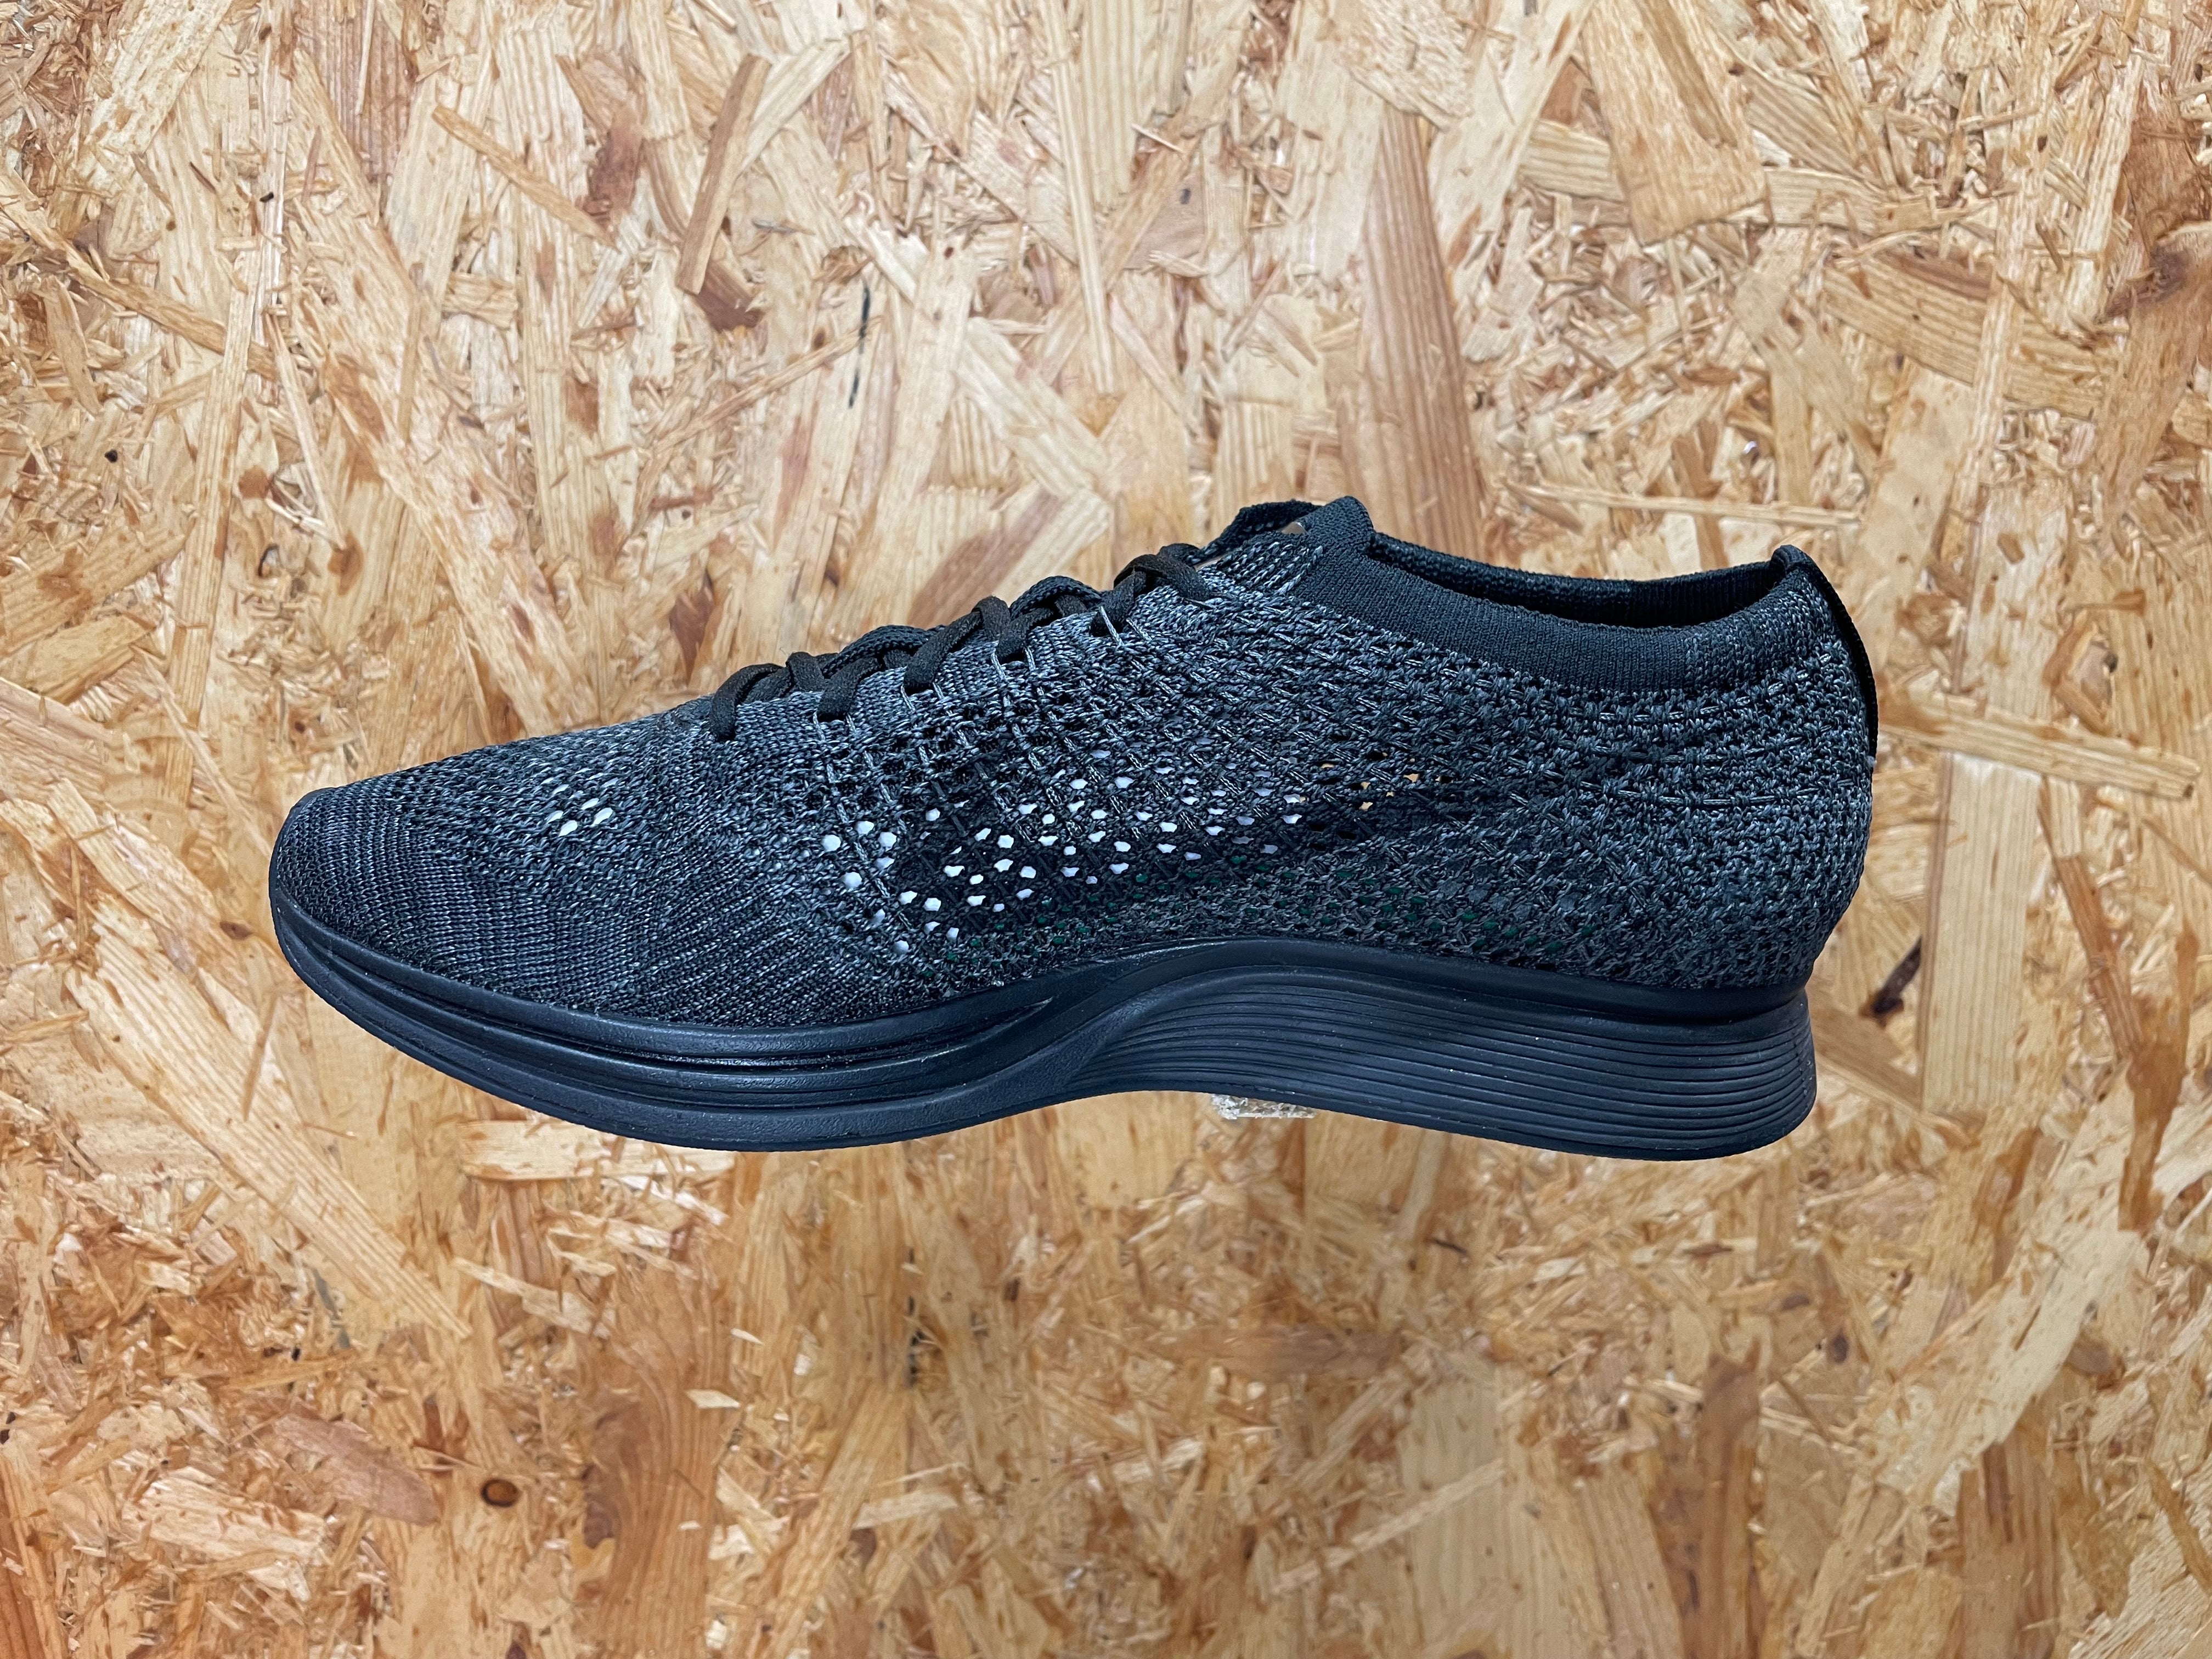 Nike Flyknit racer "Triple Black" 009 – The Sneaker Store Brighton